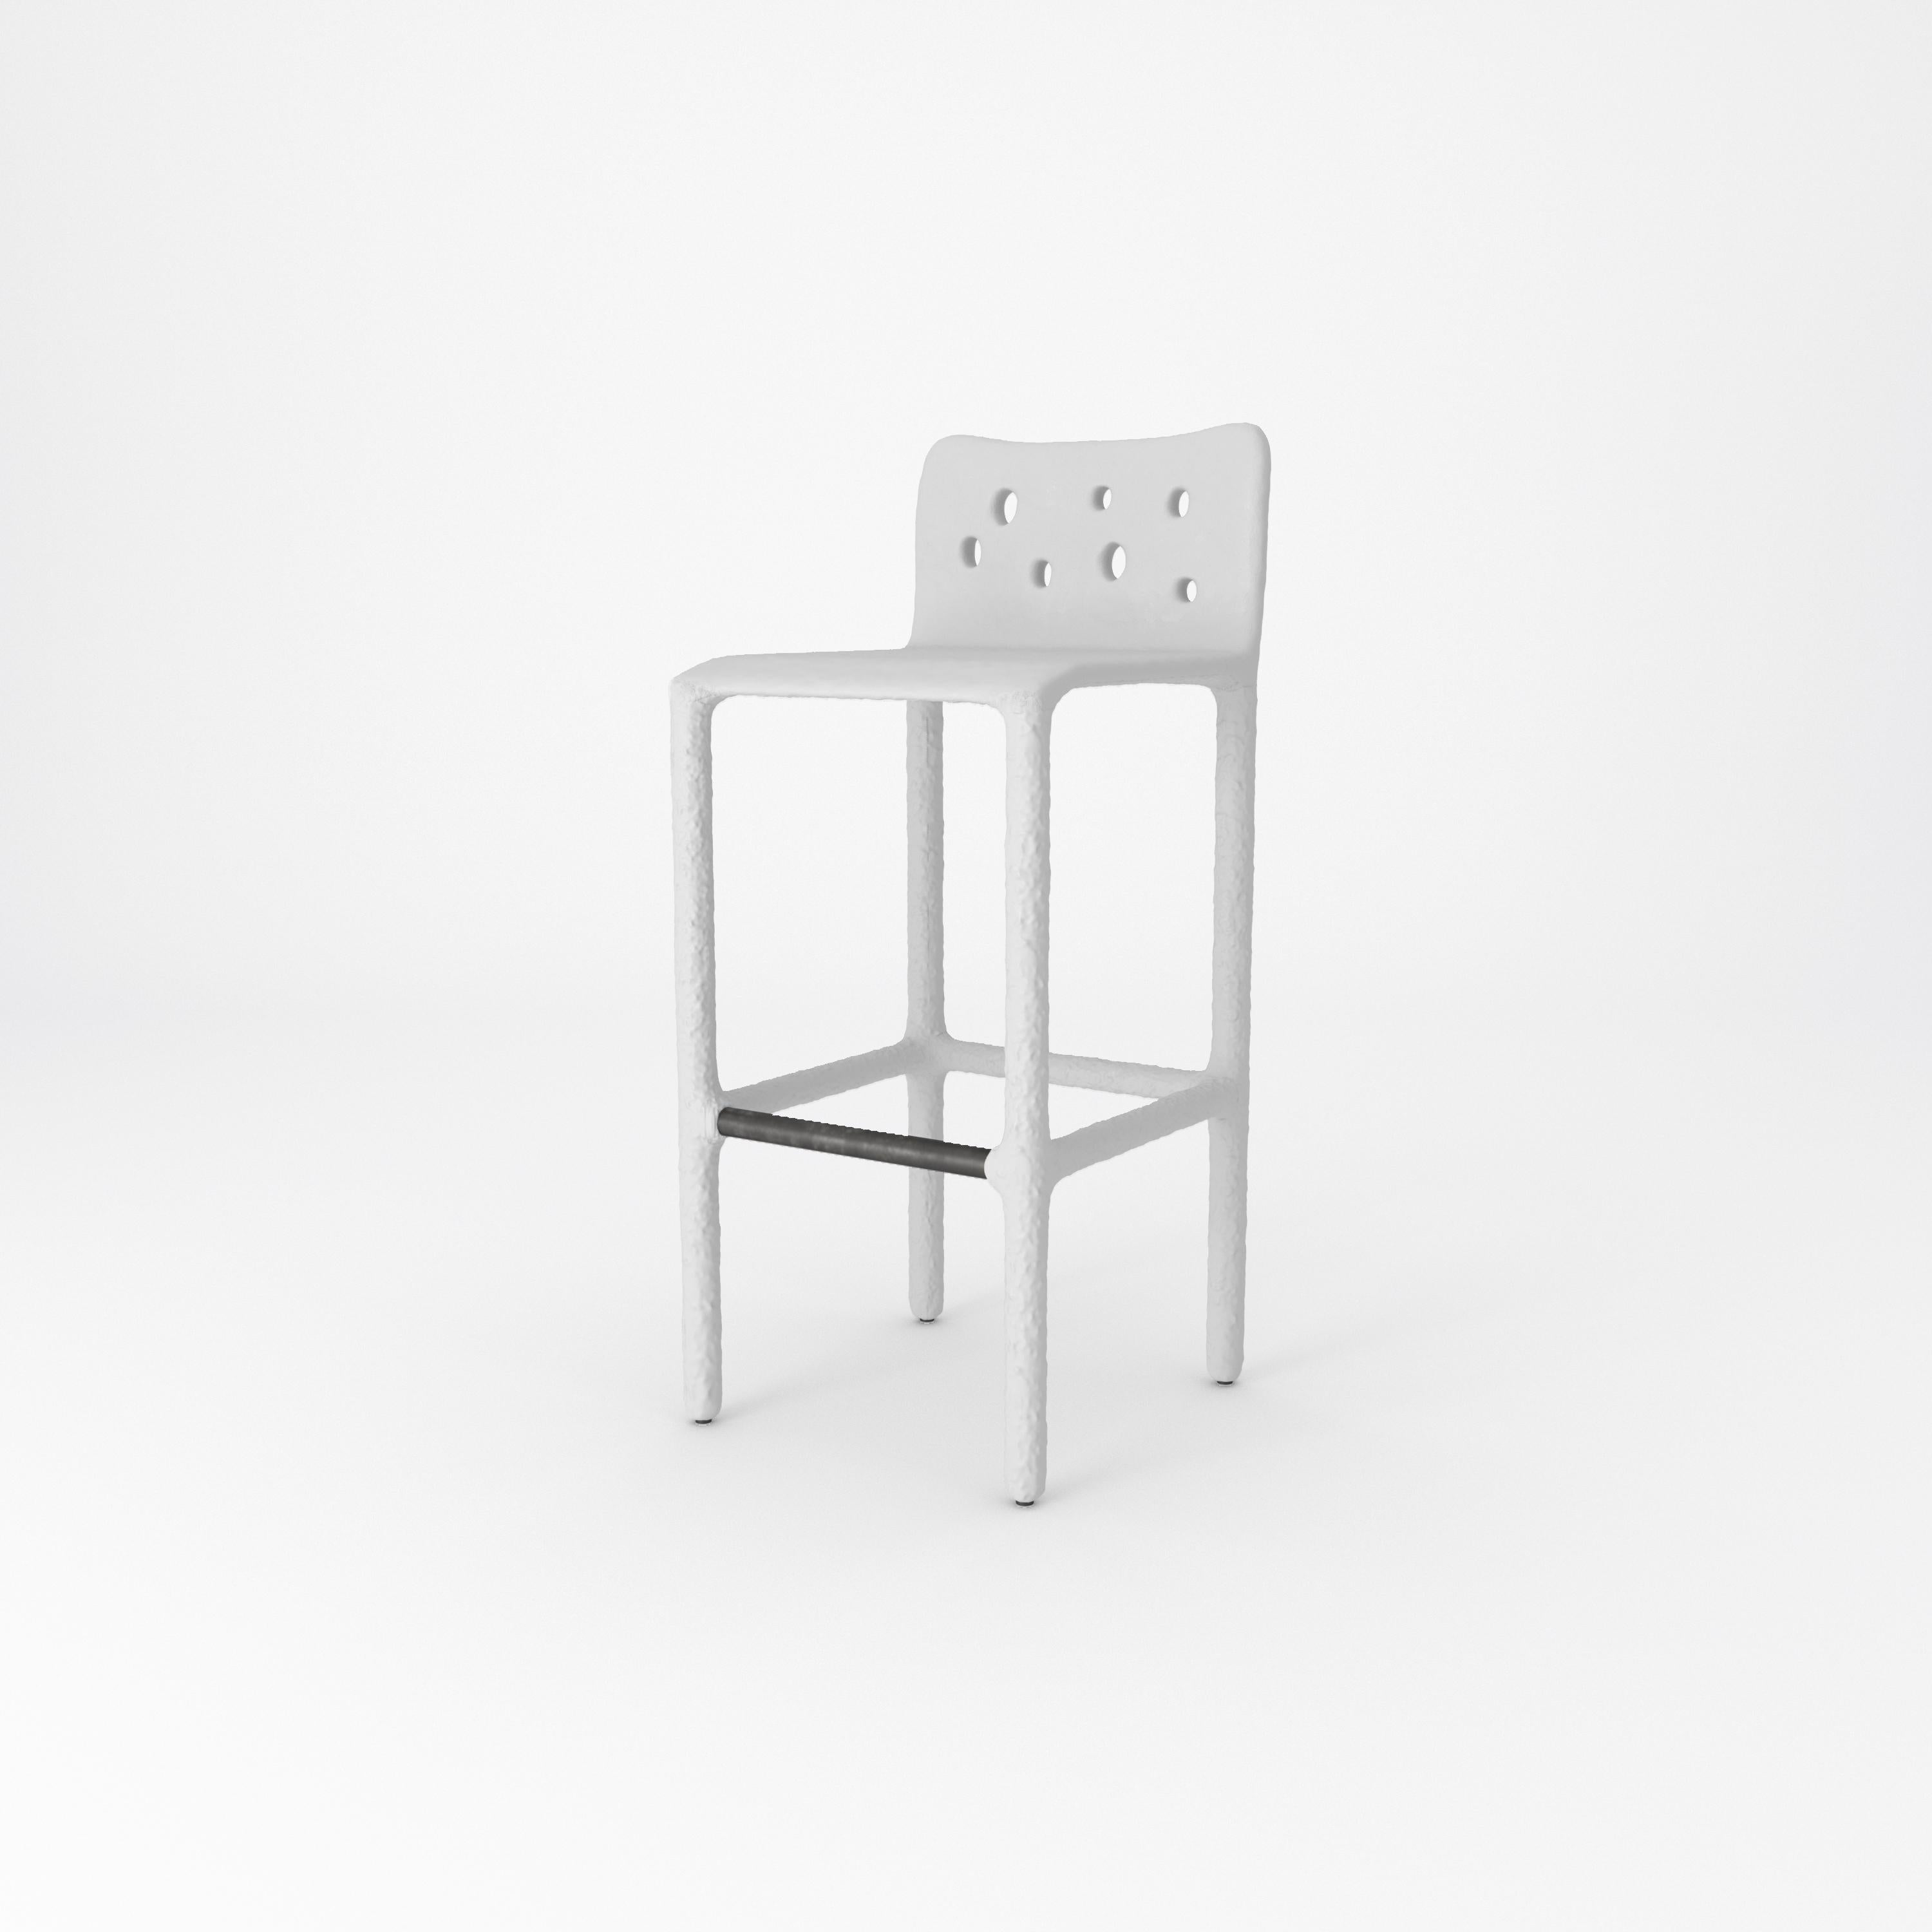 White Sculpted Contemporary Chair by FAINA 9